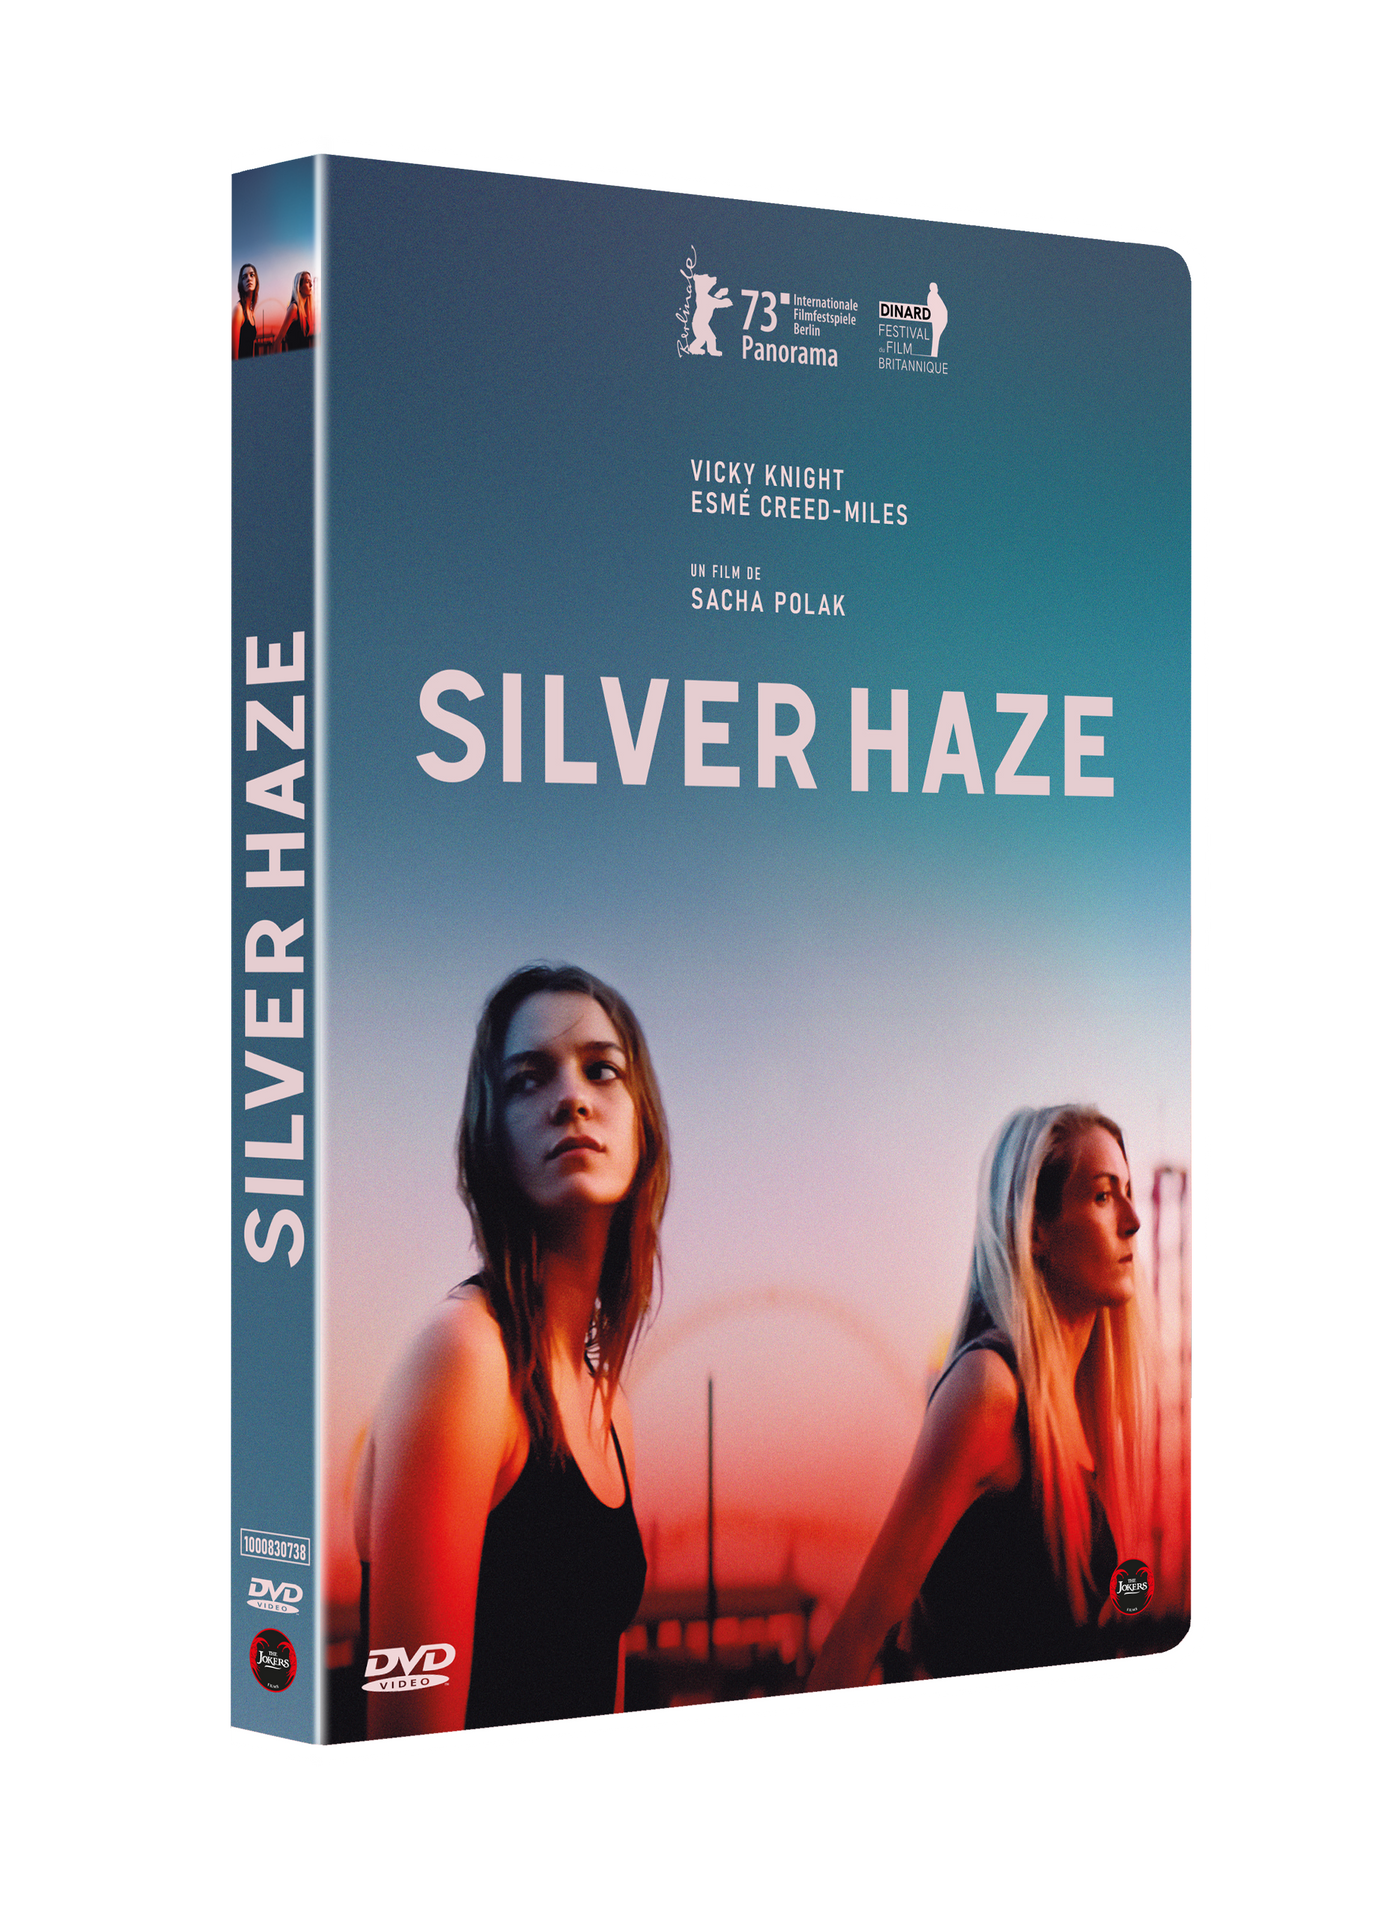 DVD "Silver Haze"